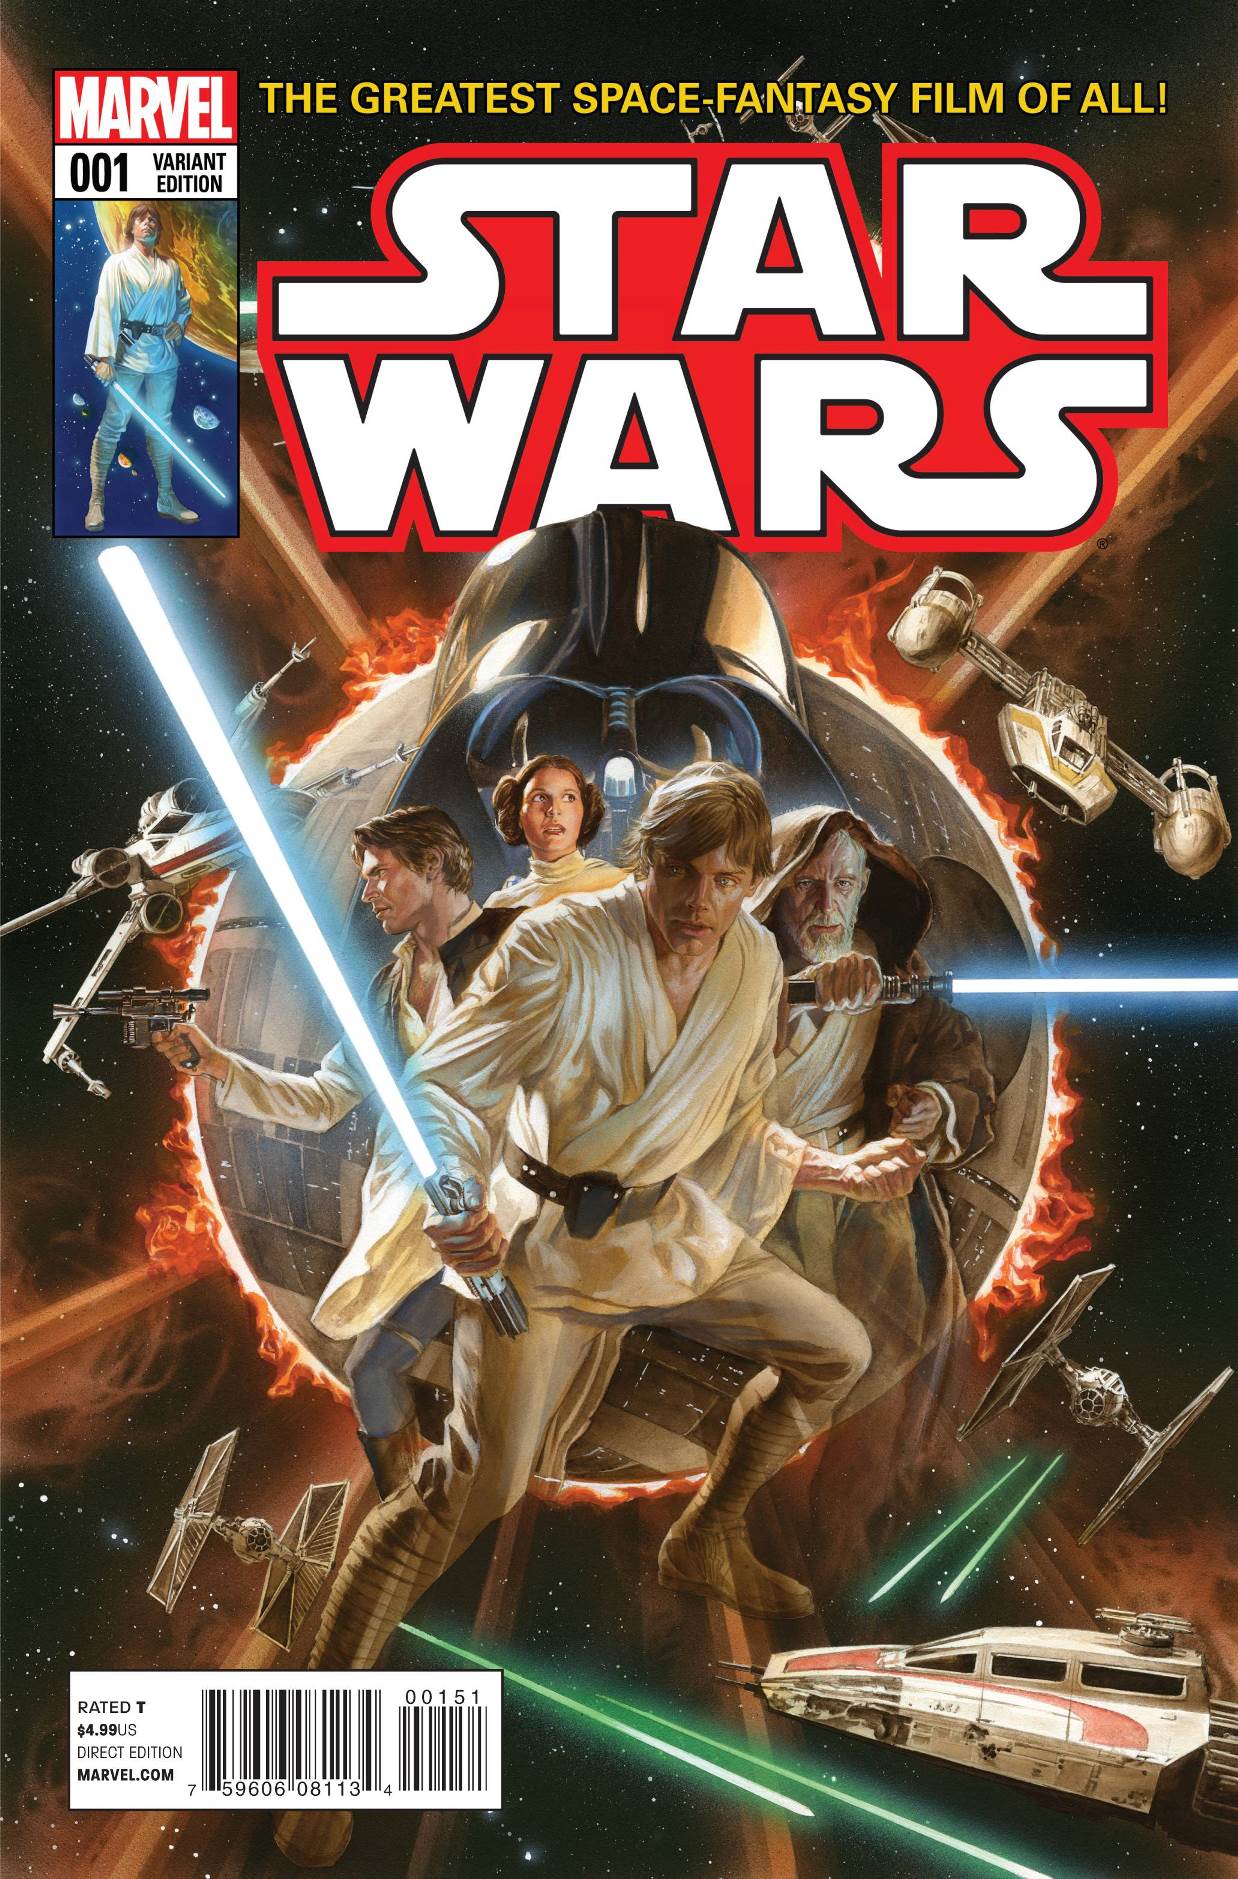 STAR WARS #1 MOVIE VARIANT COVER 1:15 MARVEL COMICS 2015